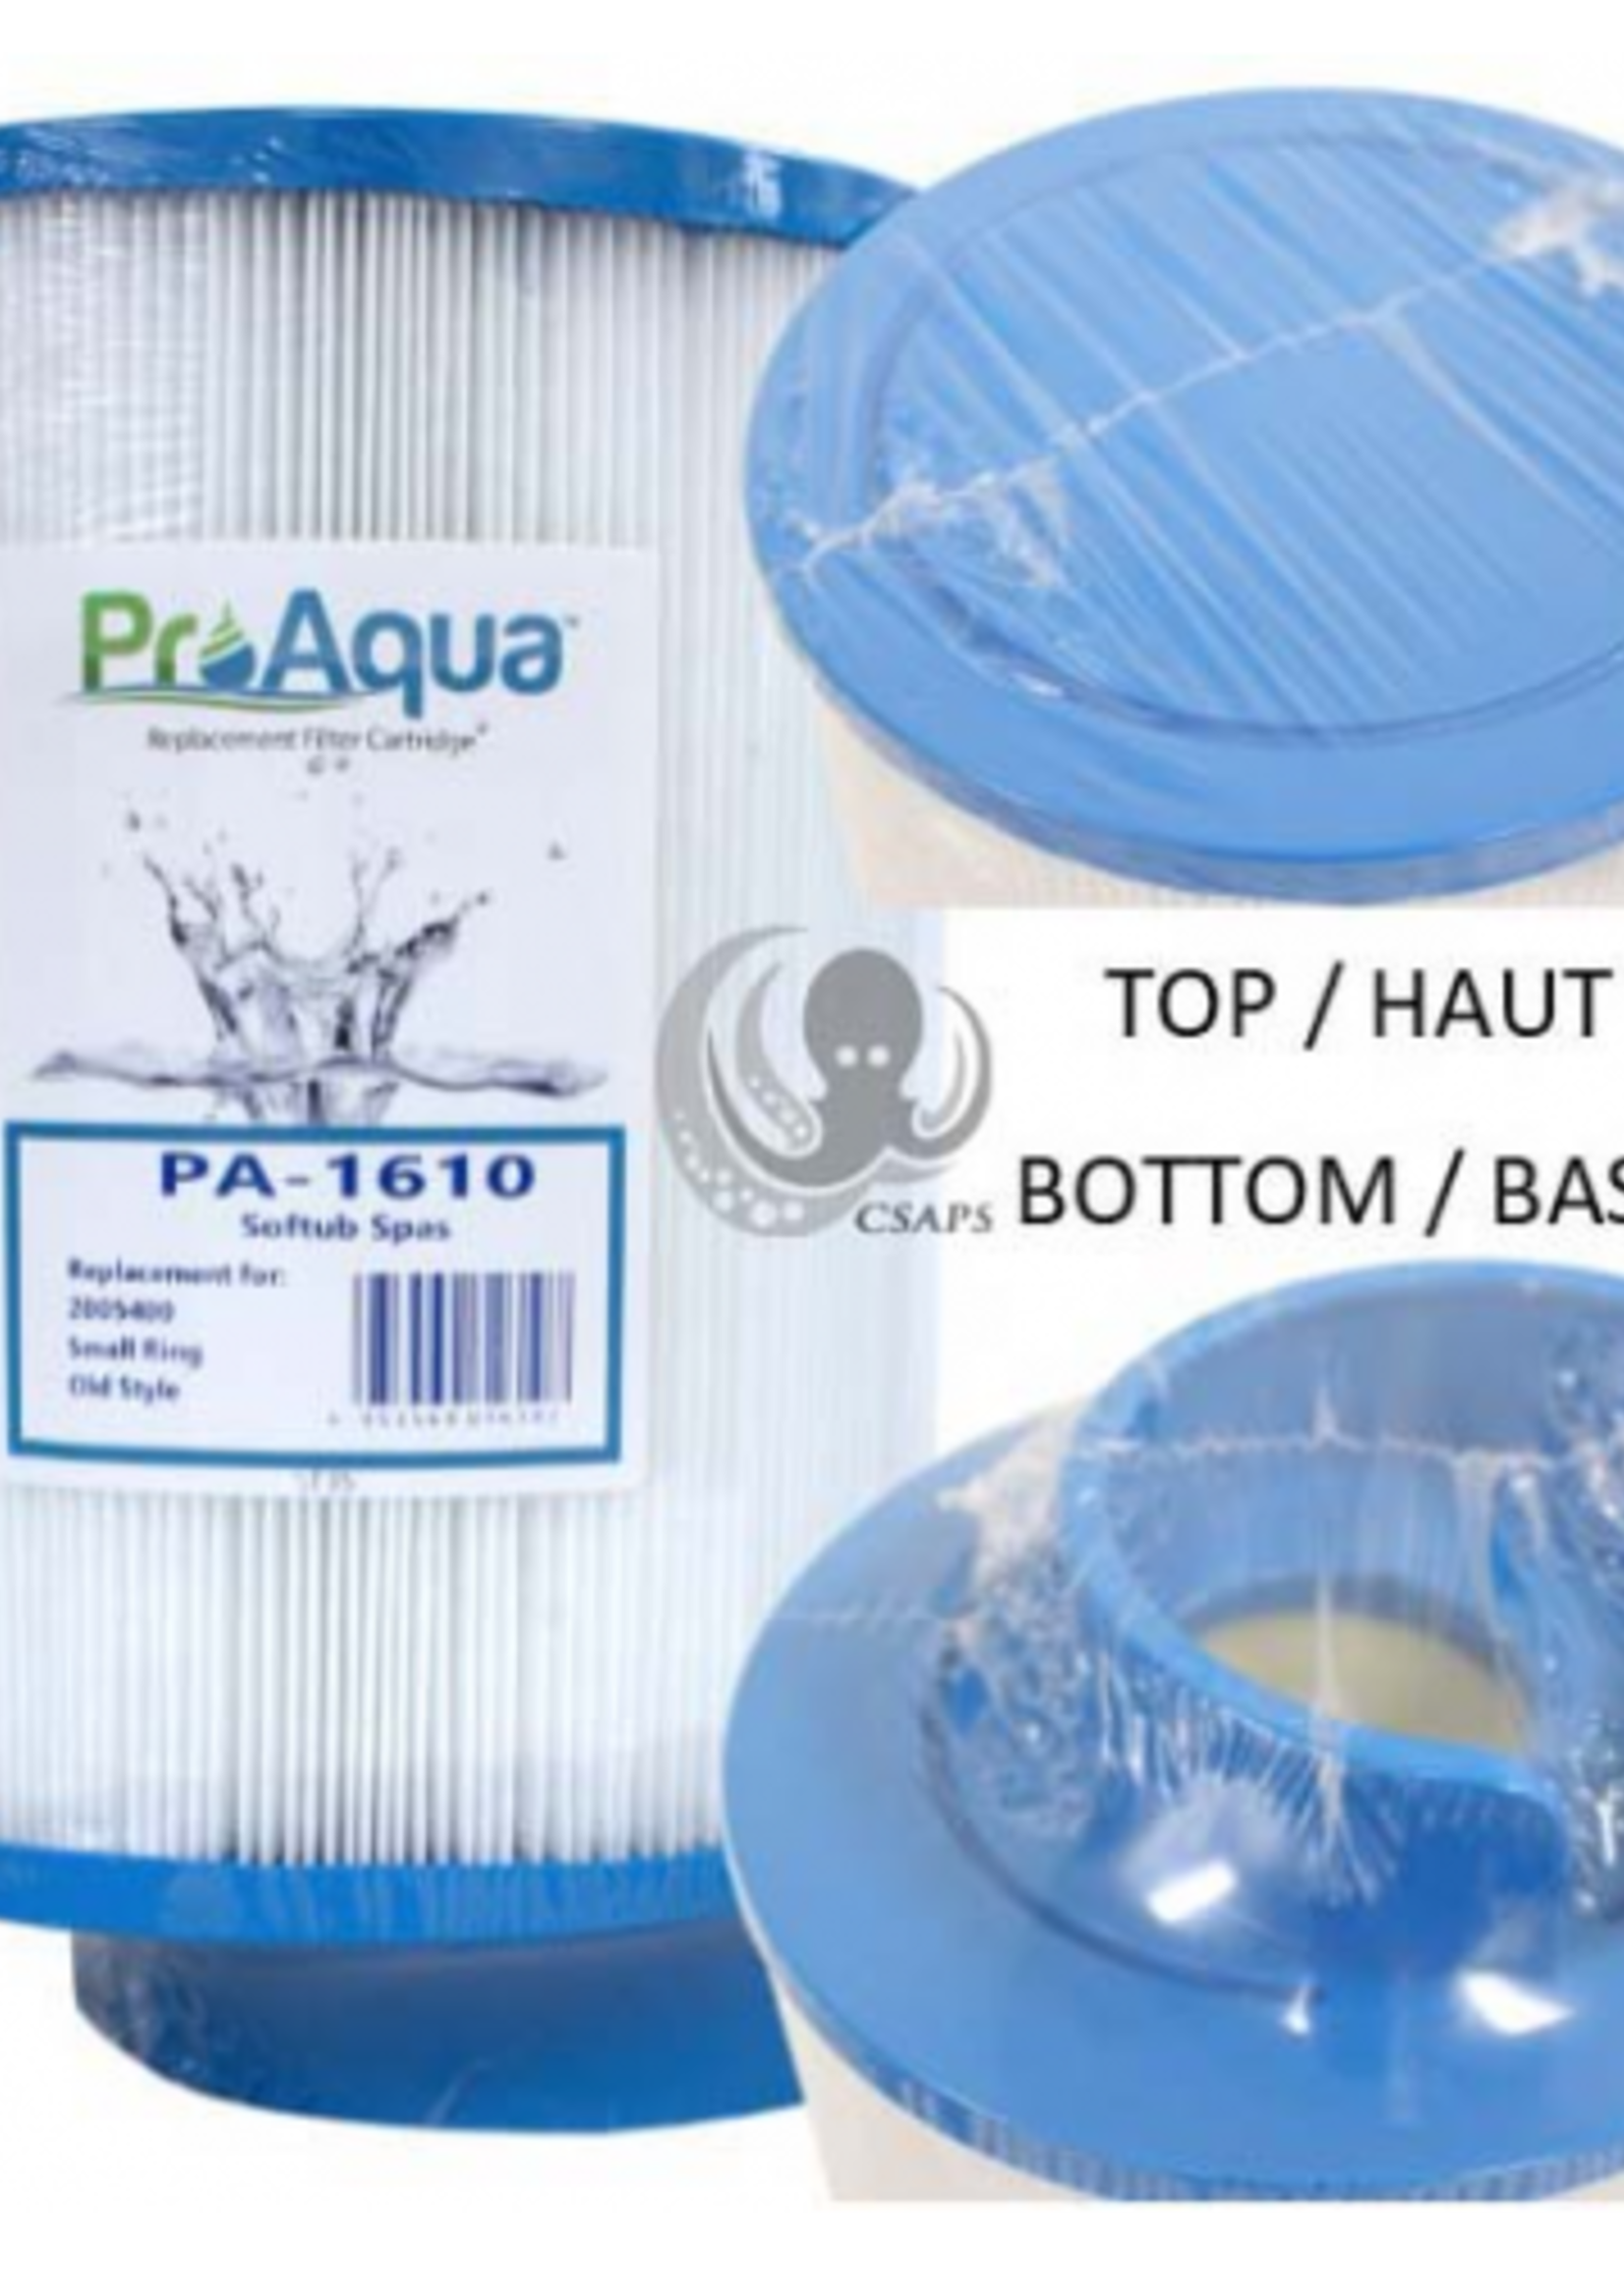 Pro Aqua Pro Aqua Filter Cartridge PA-1610 (Softub Old Style)